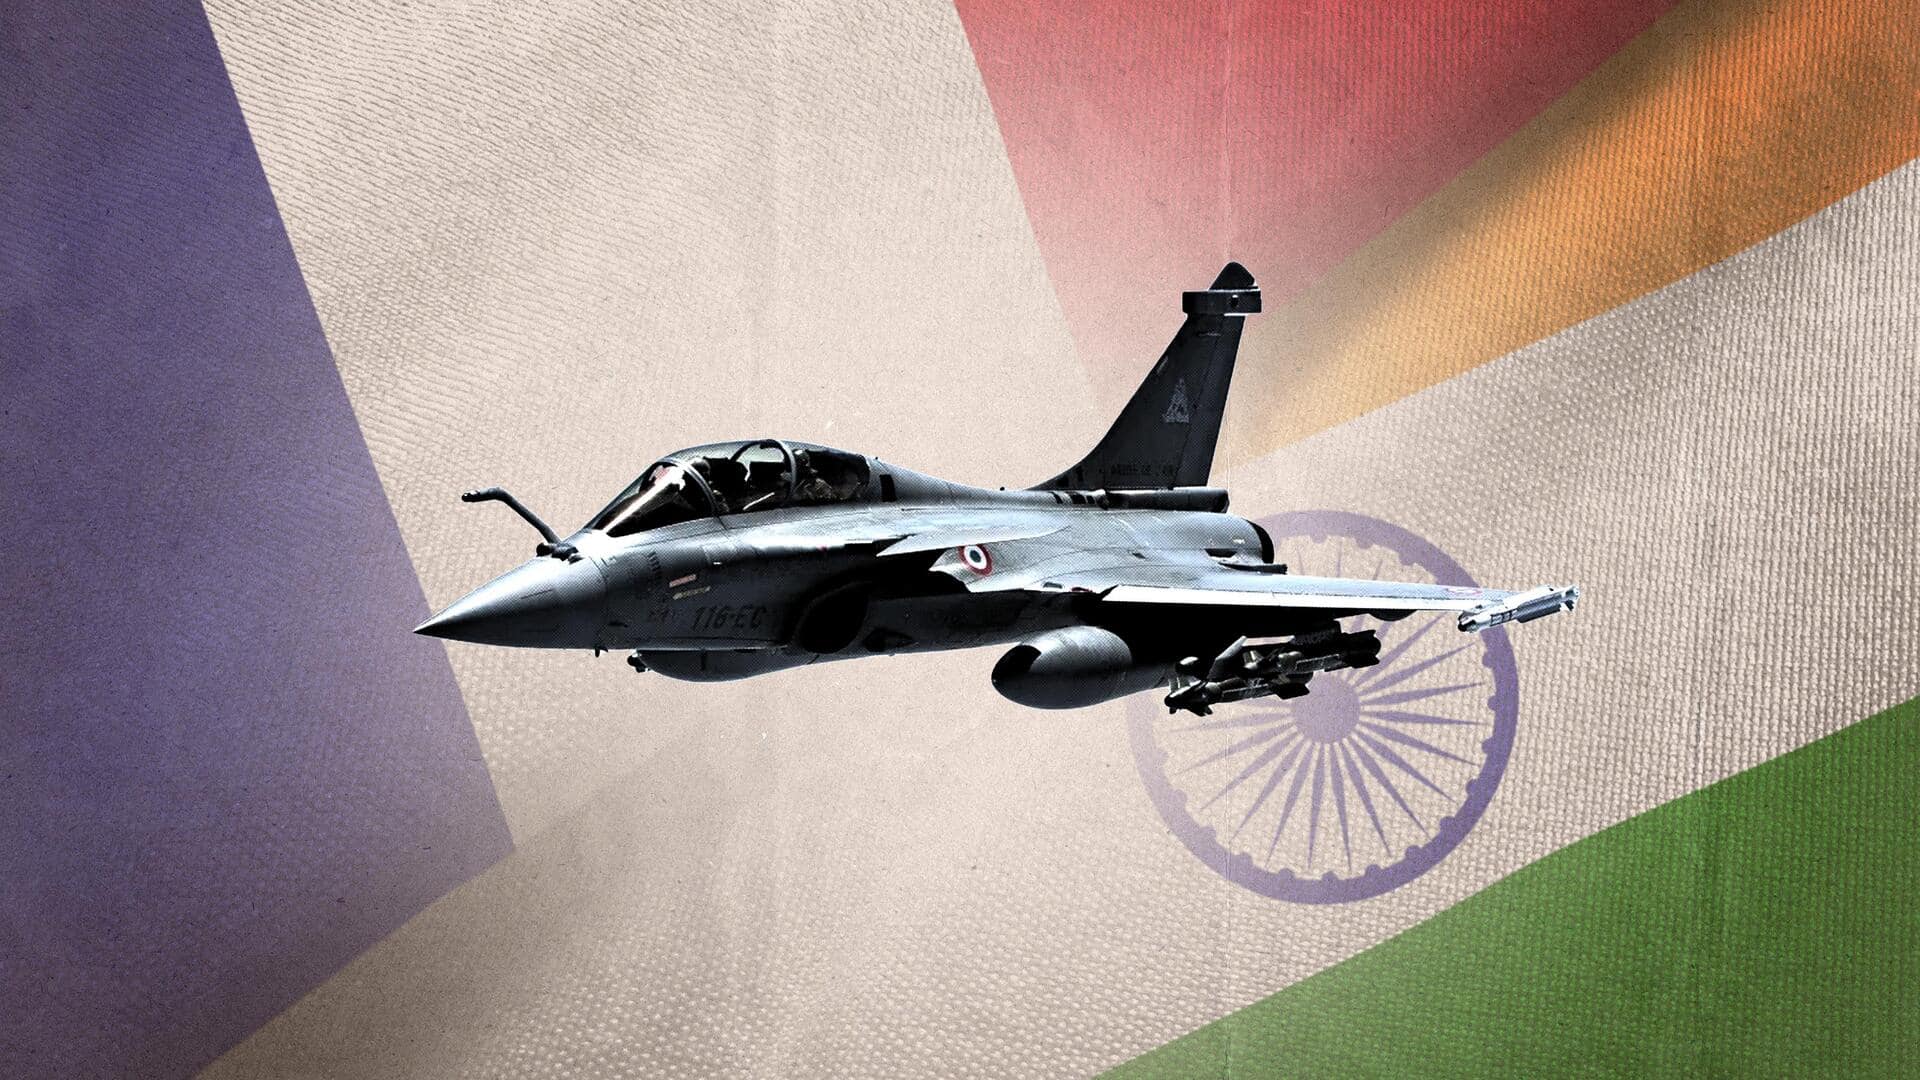 फ्रांस से 26 राफेल लड़ाकू विमान और 3 पनडुब्बी खरीदेगा भारत- रिपोर्ट